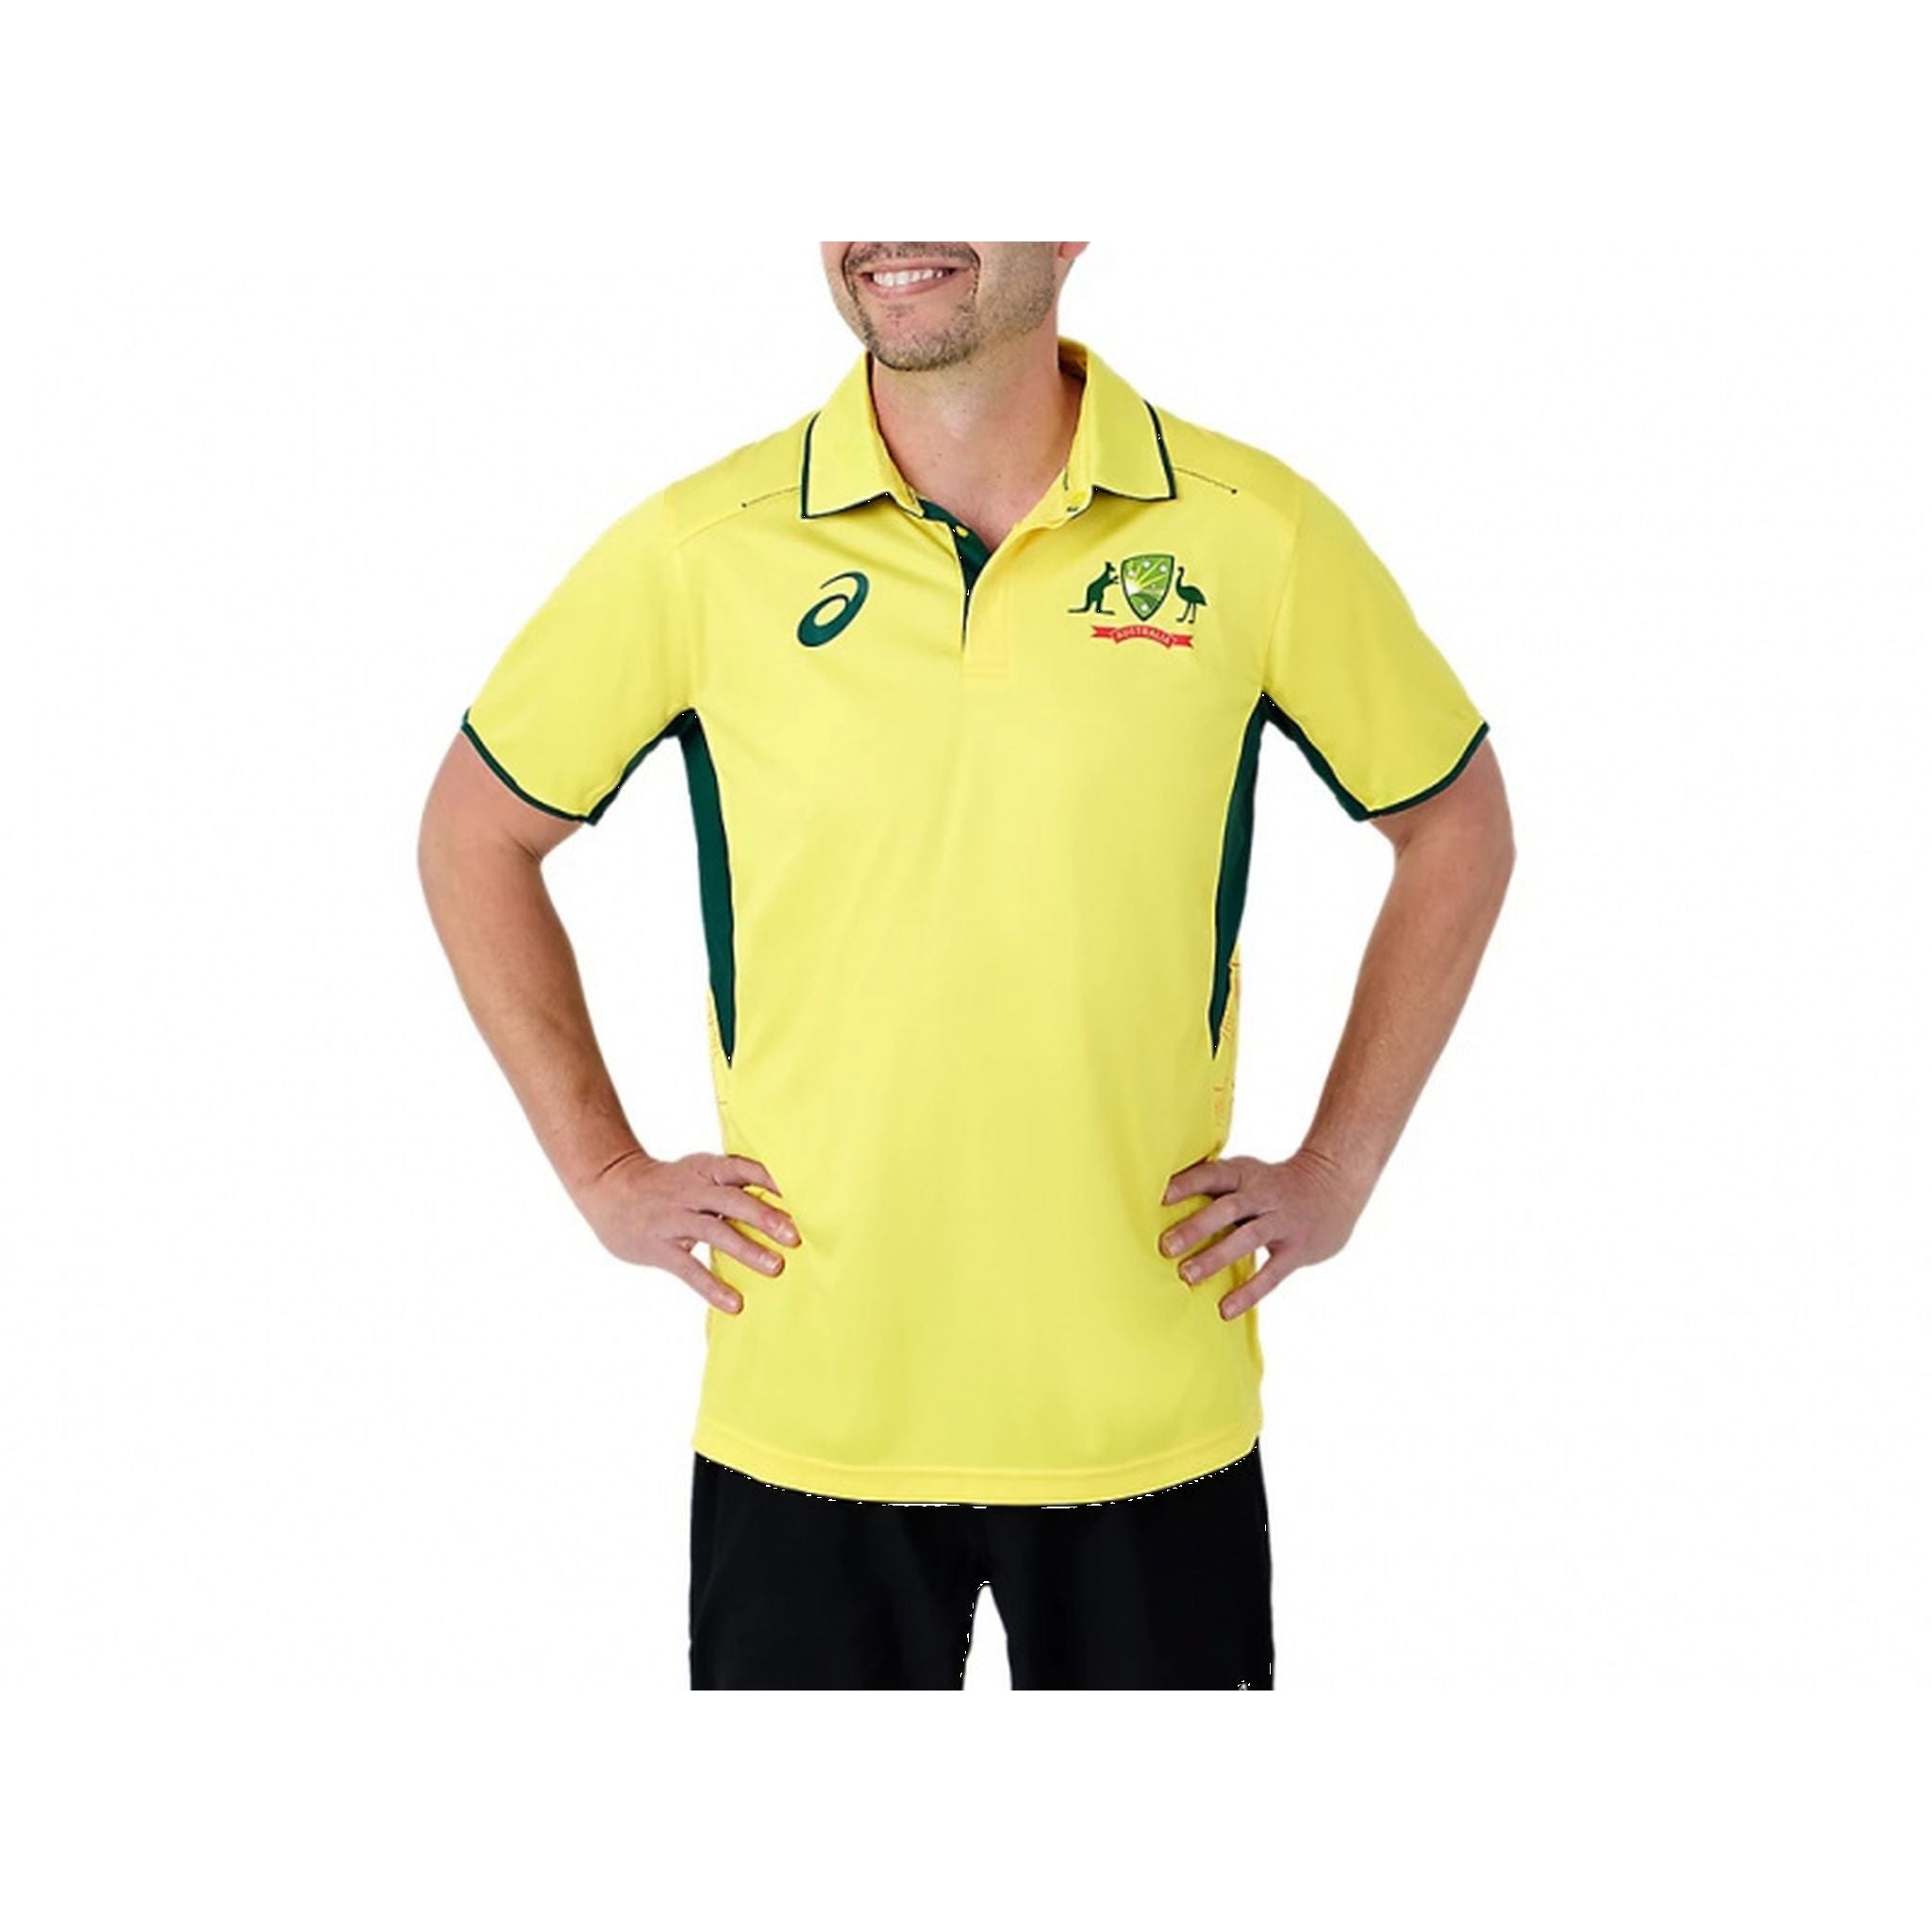 Asics Cricket Australia Adults Replica ODI Cricket Shirt